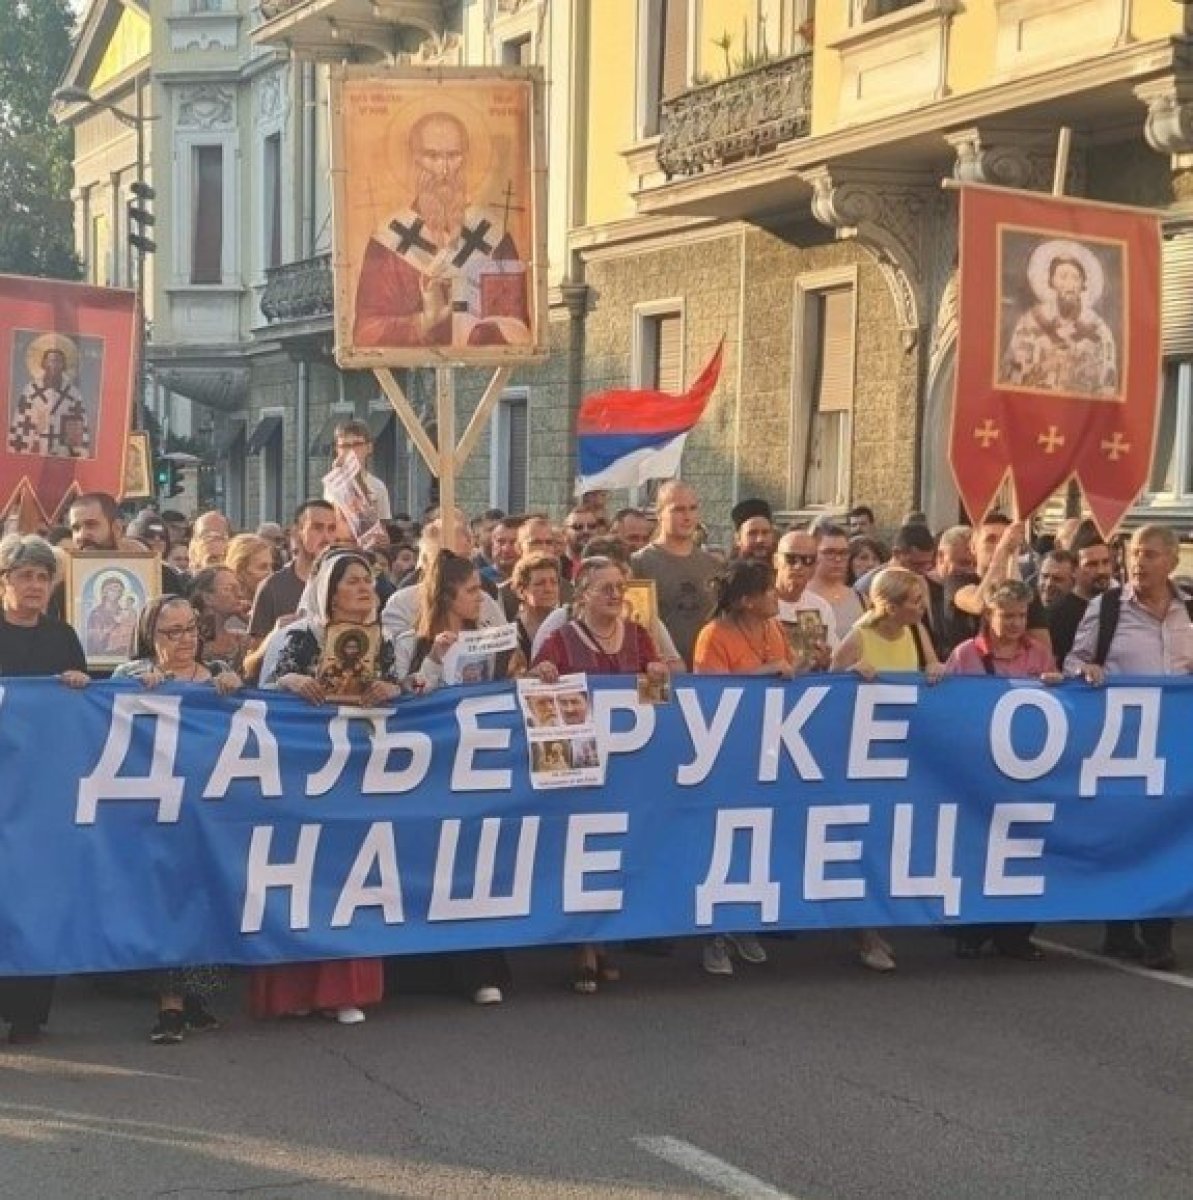 Serbian President Vucic cancels LGBT event #2